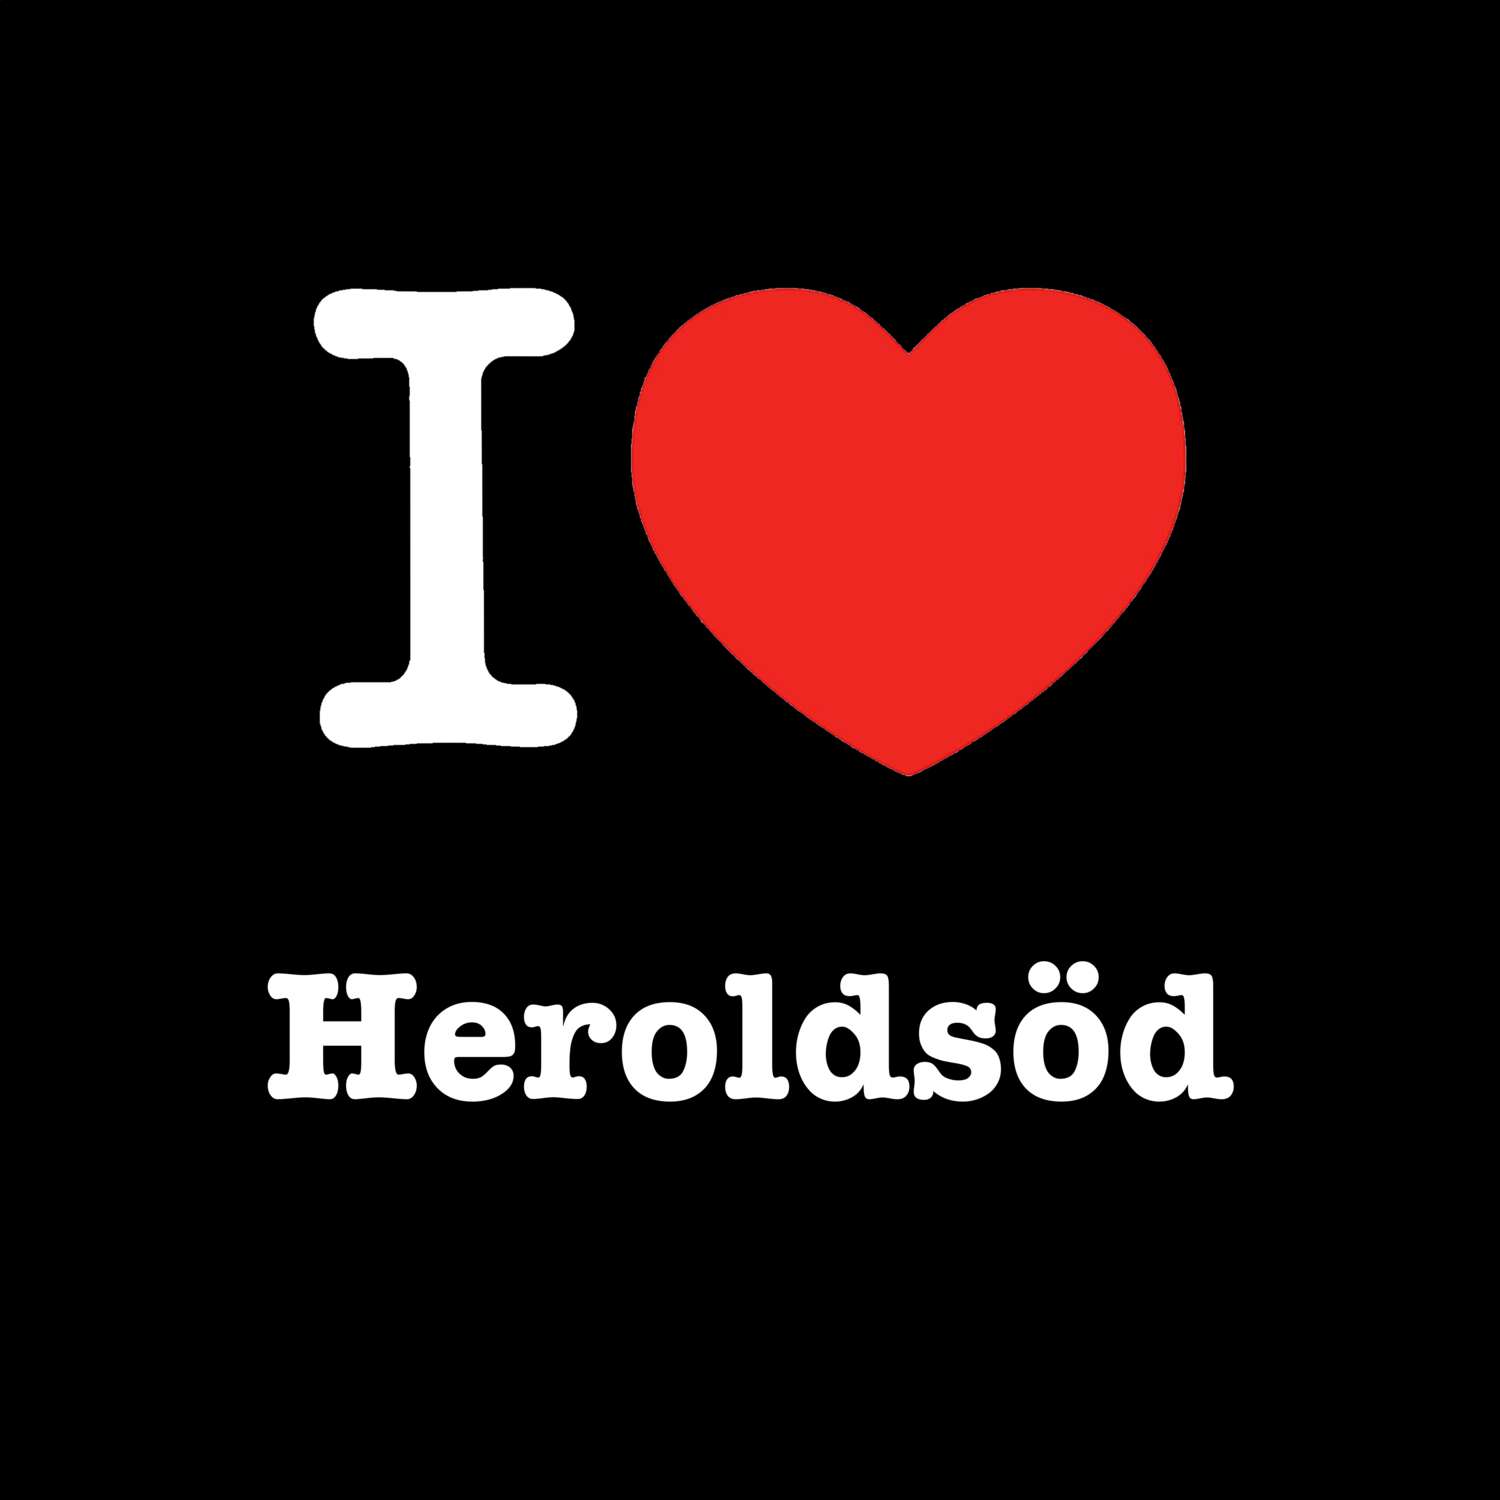 Heroldsöd T-Shirt »I love«